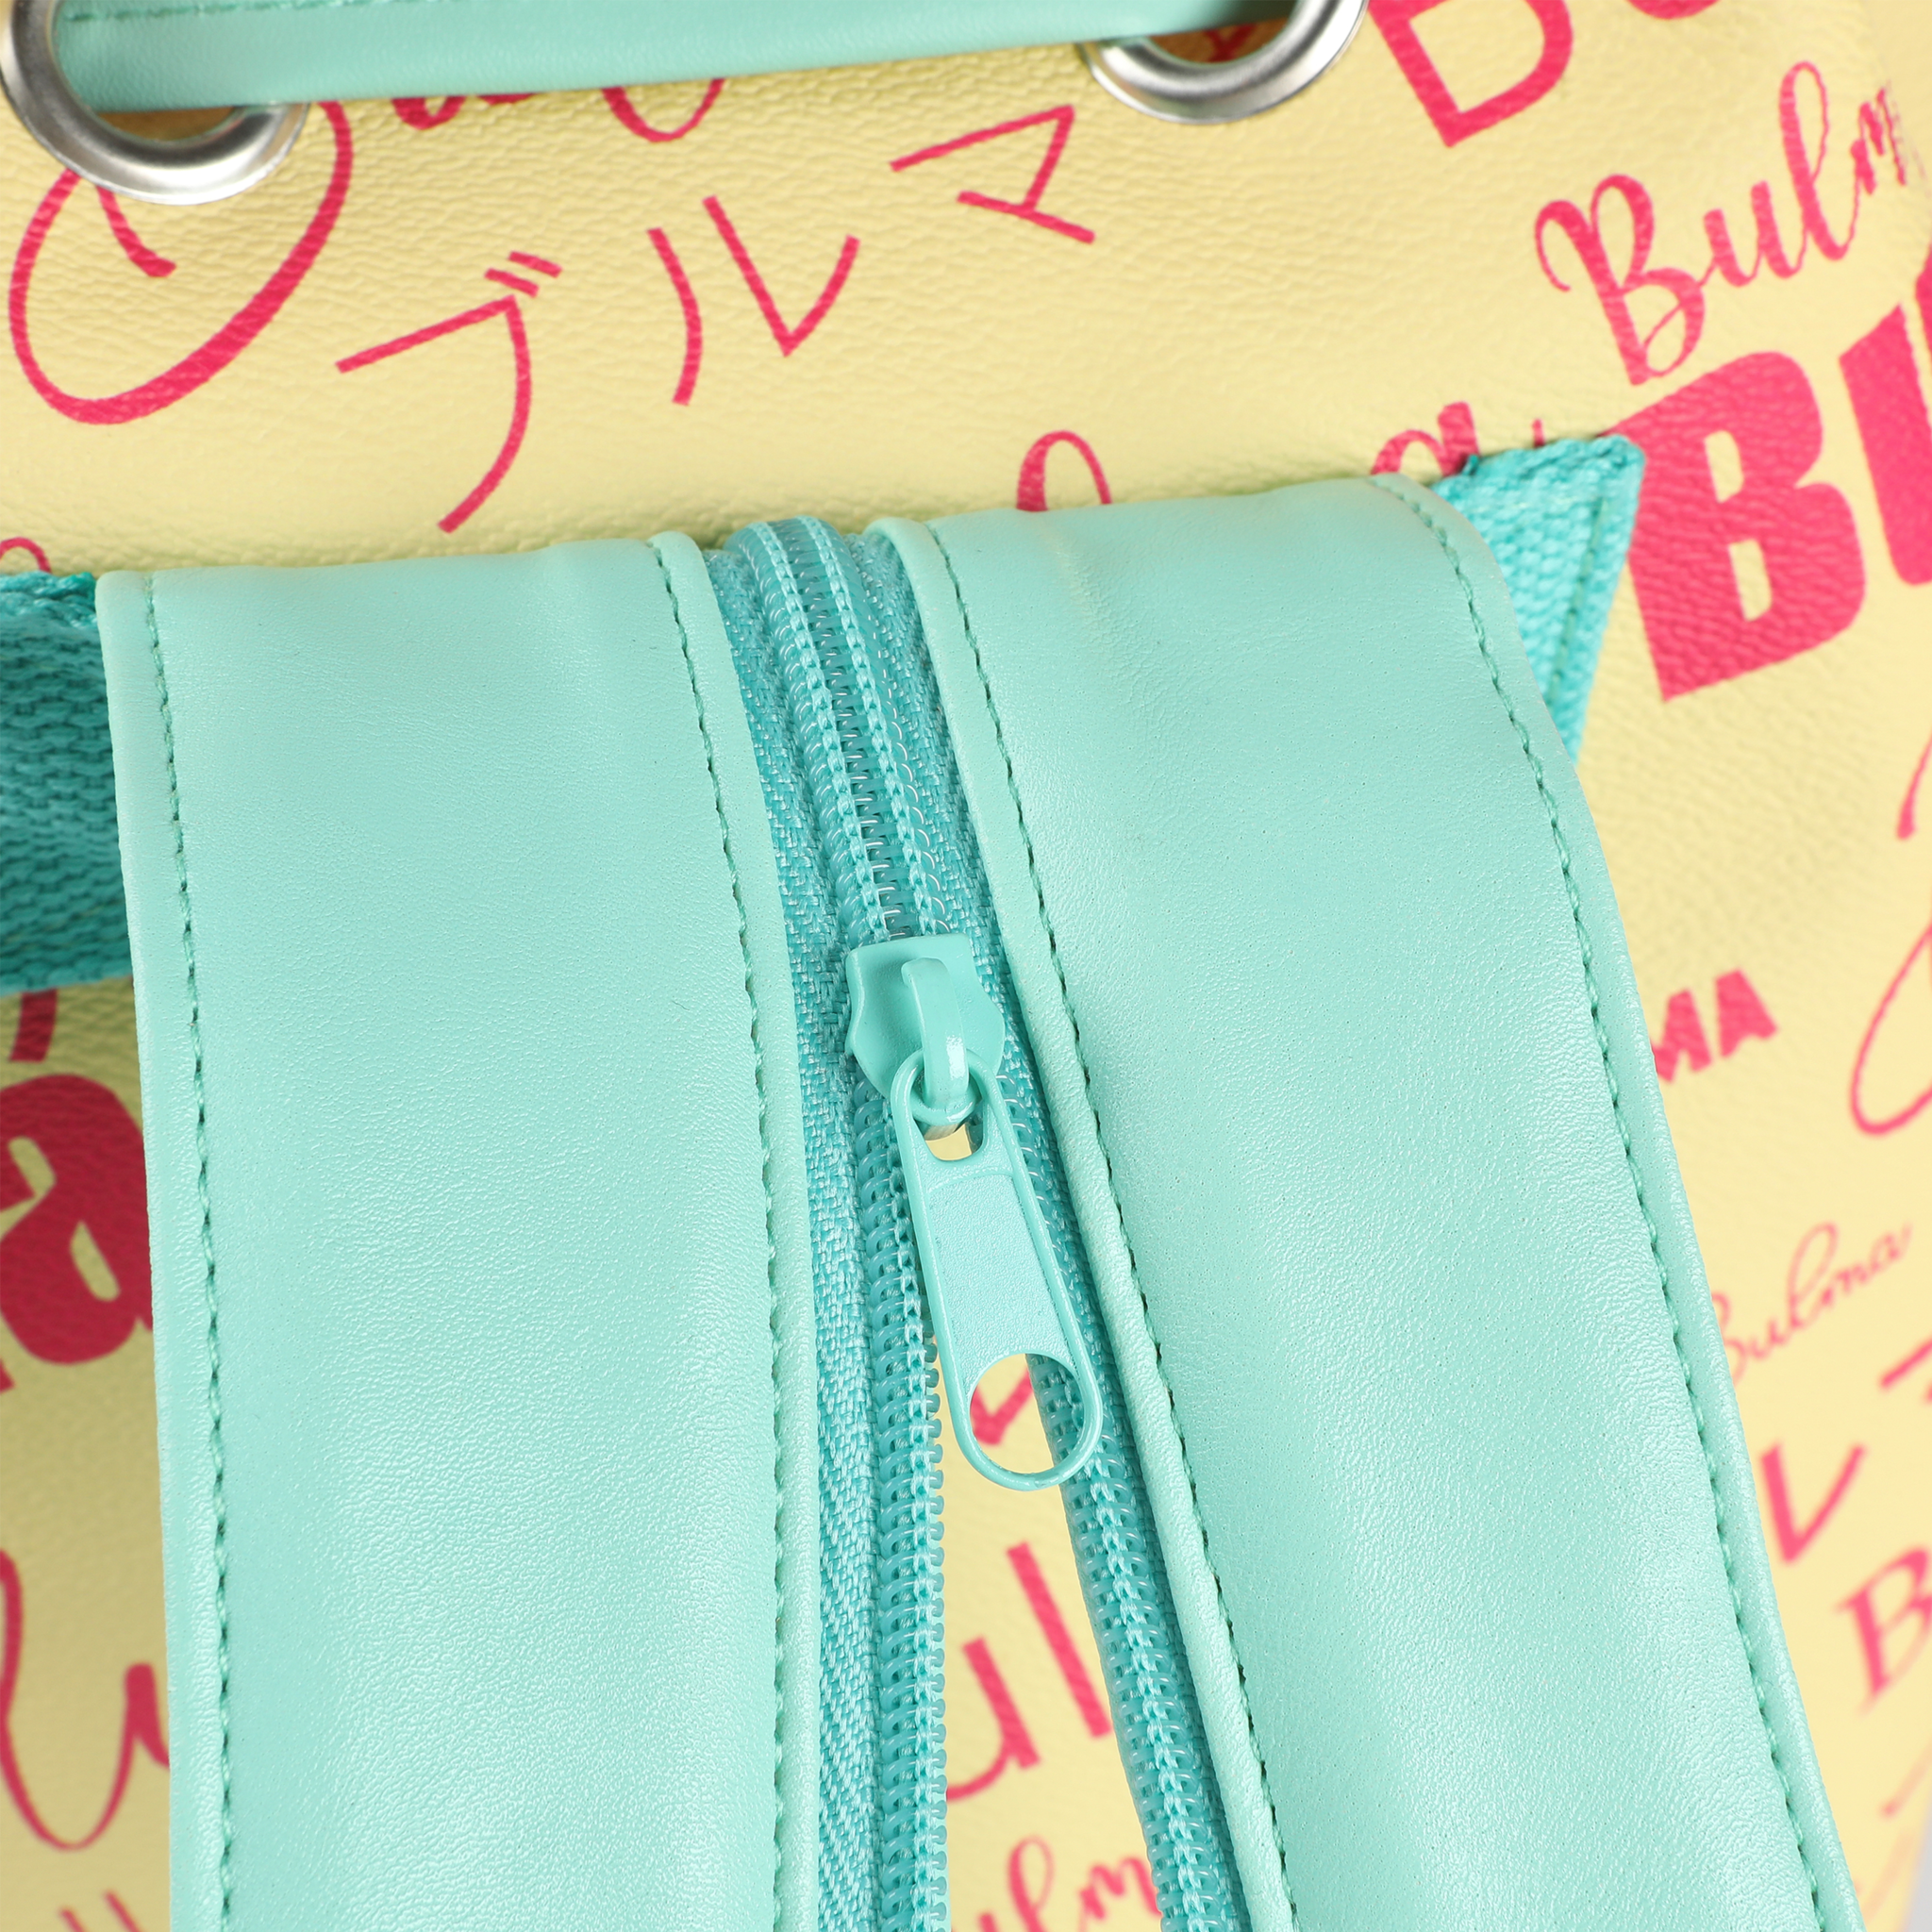 Dragon Ball Backpack, Bulma - 49 x 29 x 29 cm - PU Leather